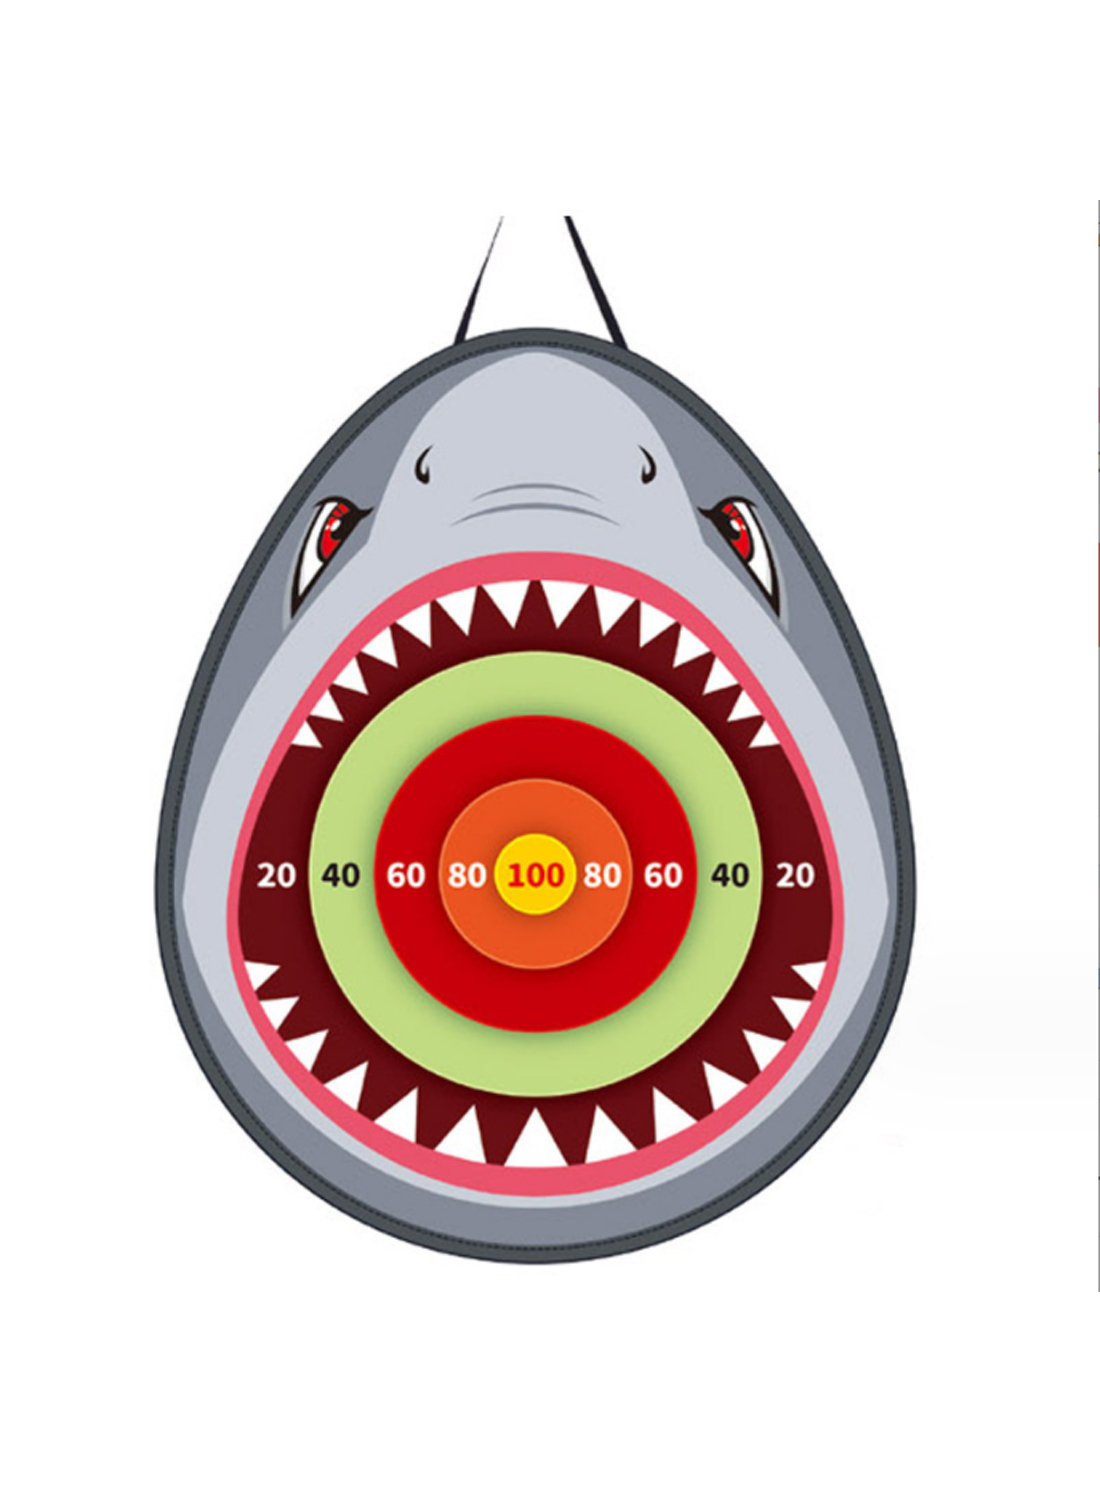 3-in-1 Shark Target Children's Game Shooting Toys